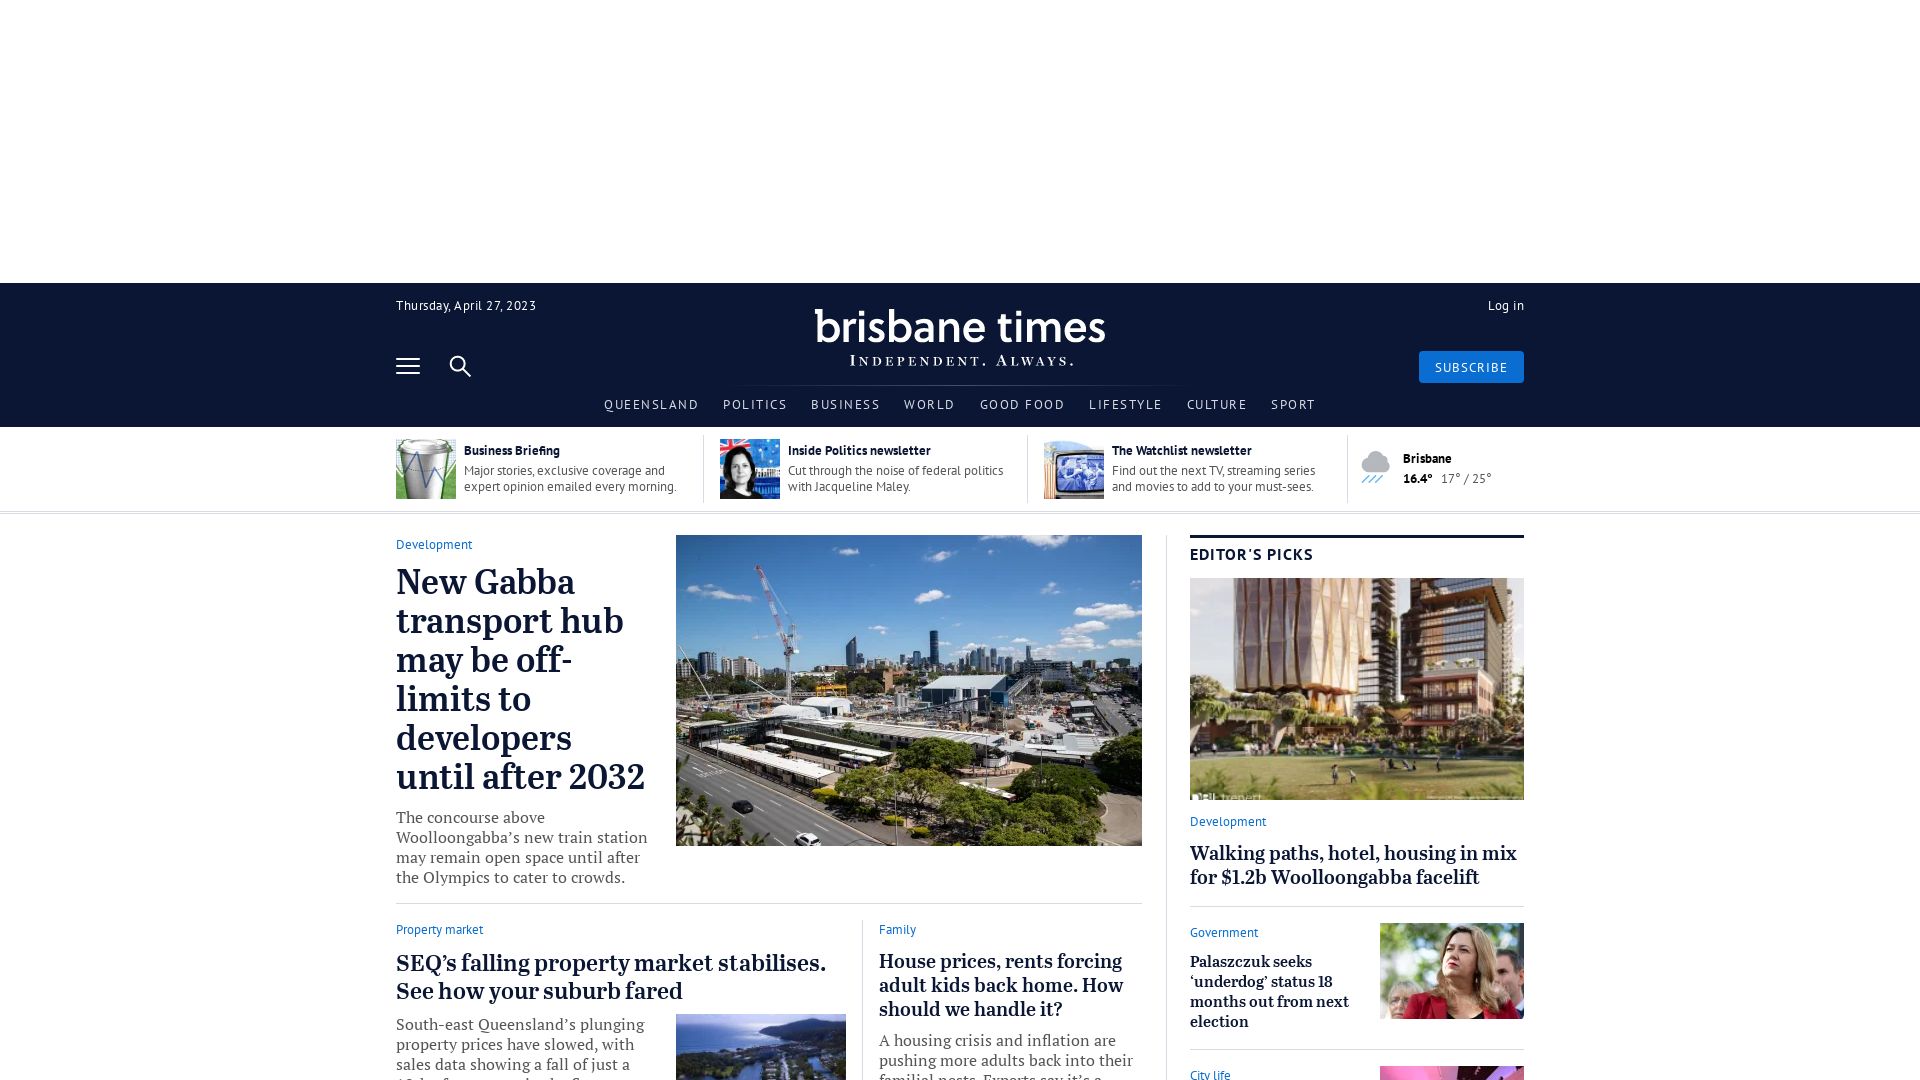 Website status brisbanetimes.com.au is   ONLINE